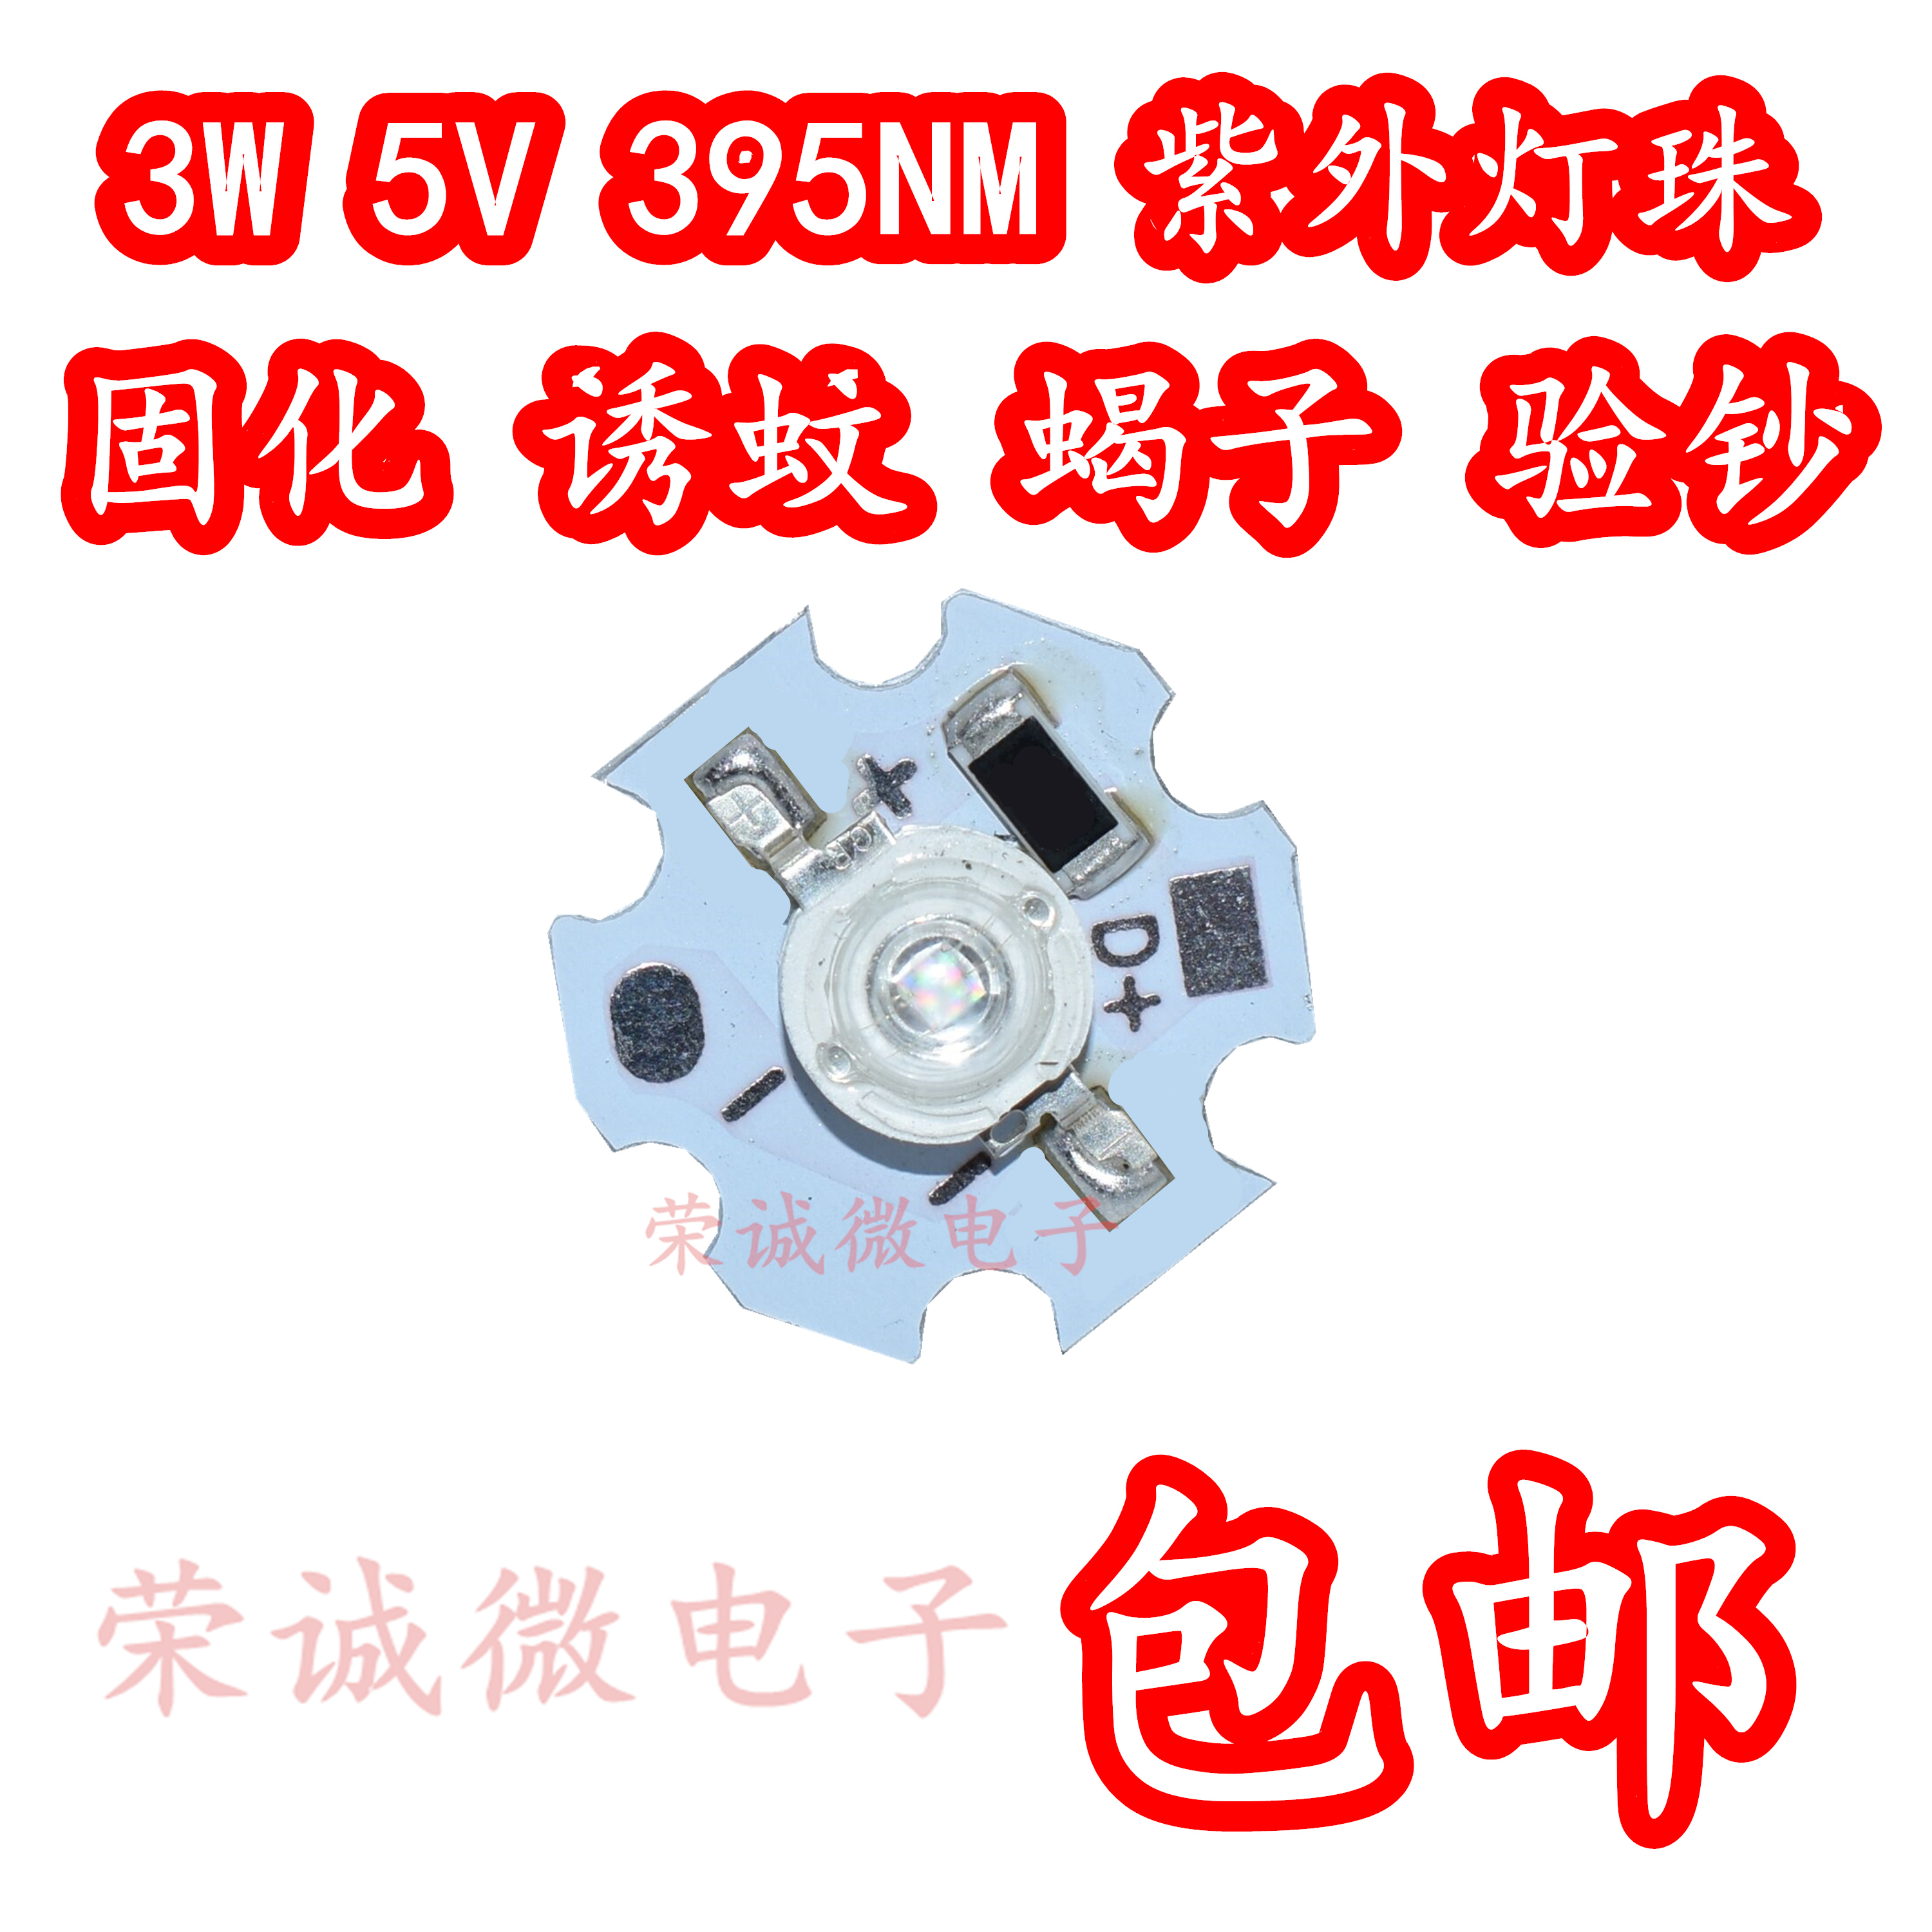 3W美甲固化照蝎子395nm紫光LED灯珠3.7V-5VUSB大功率uv紫外线光源